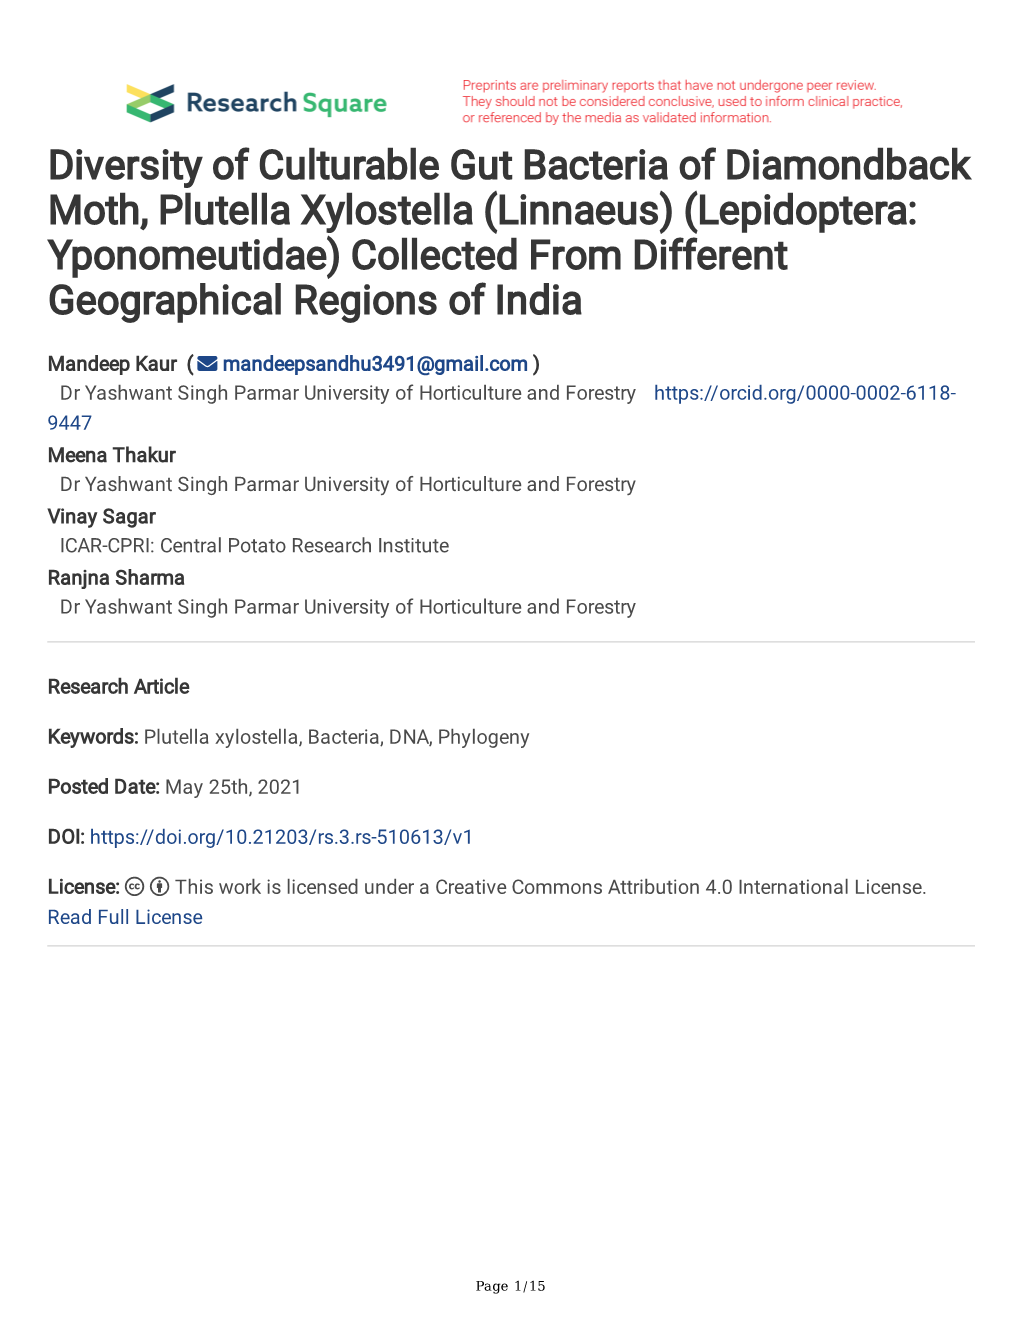 Diversity of Culturable Gut Bacteria of Diamondback Moth, Plutella Xylostella (Linnaeus) (Lepidoptera: Yponomeutidae) Collected